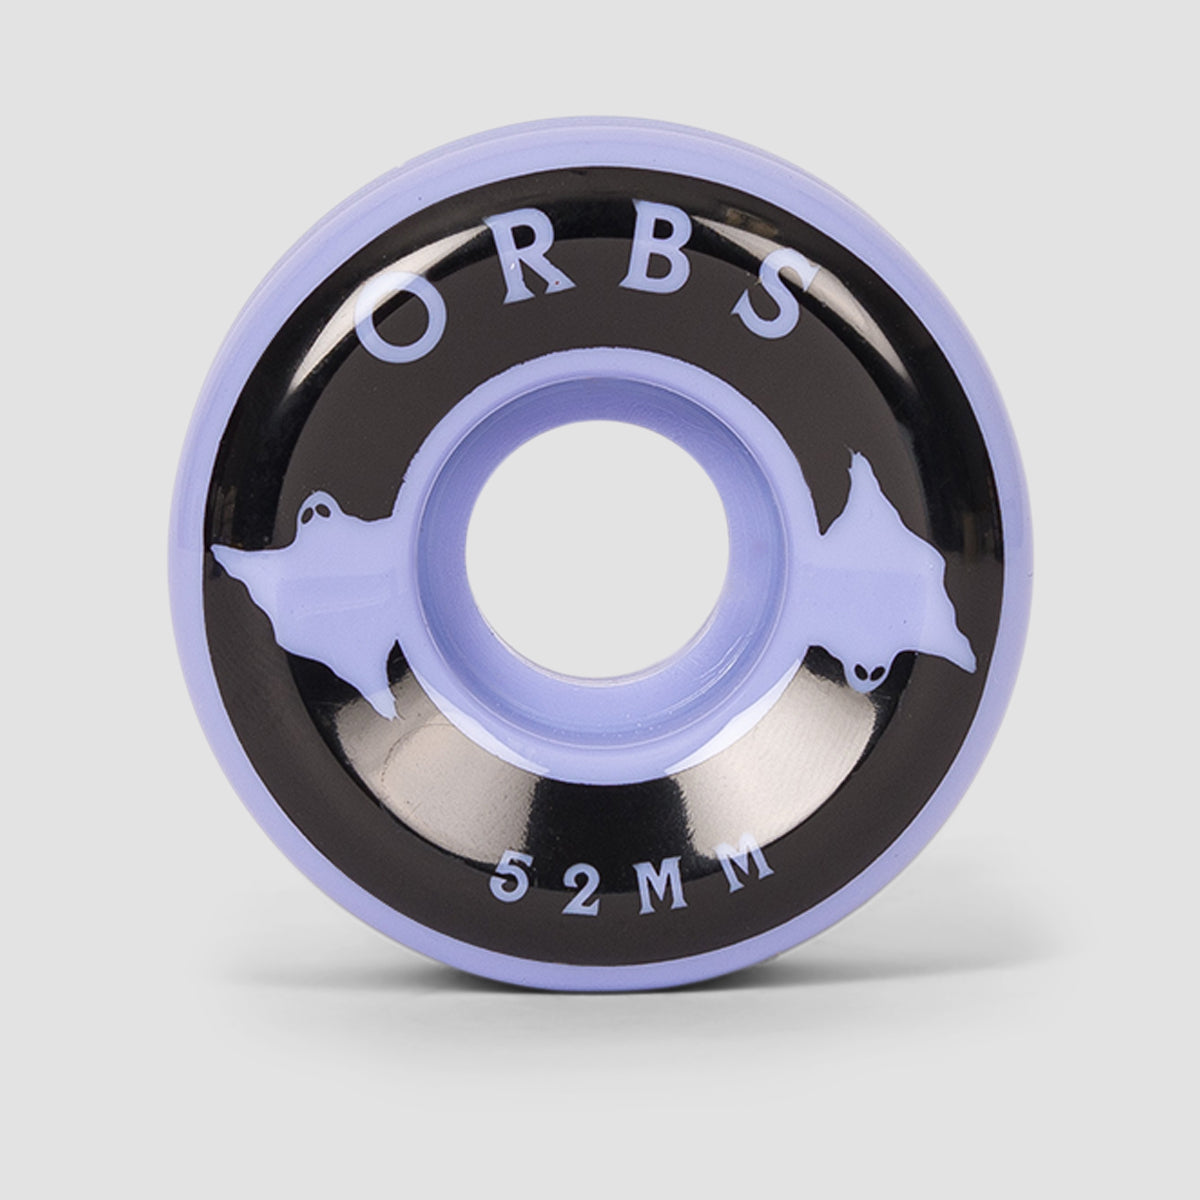 Welcome Orbs Specters Solids 99A Skateboard Wheels Lavender/Black 52mm